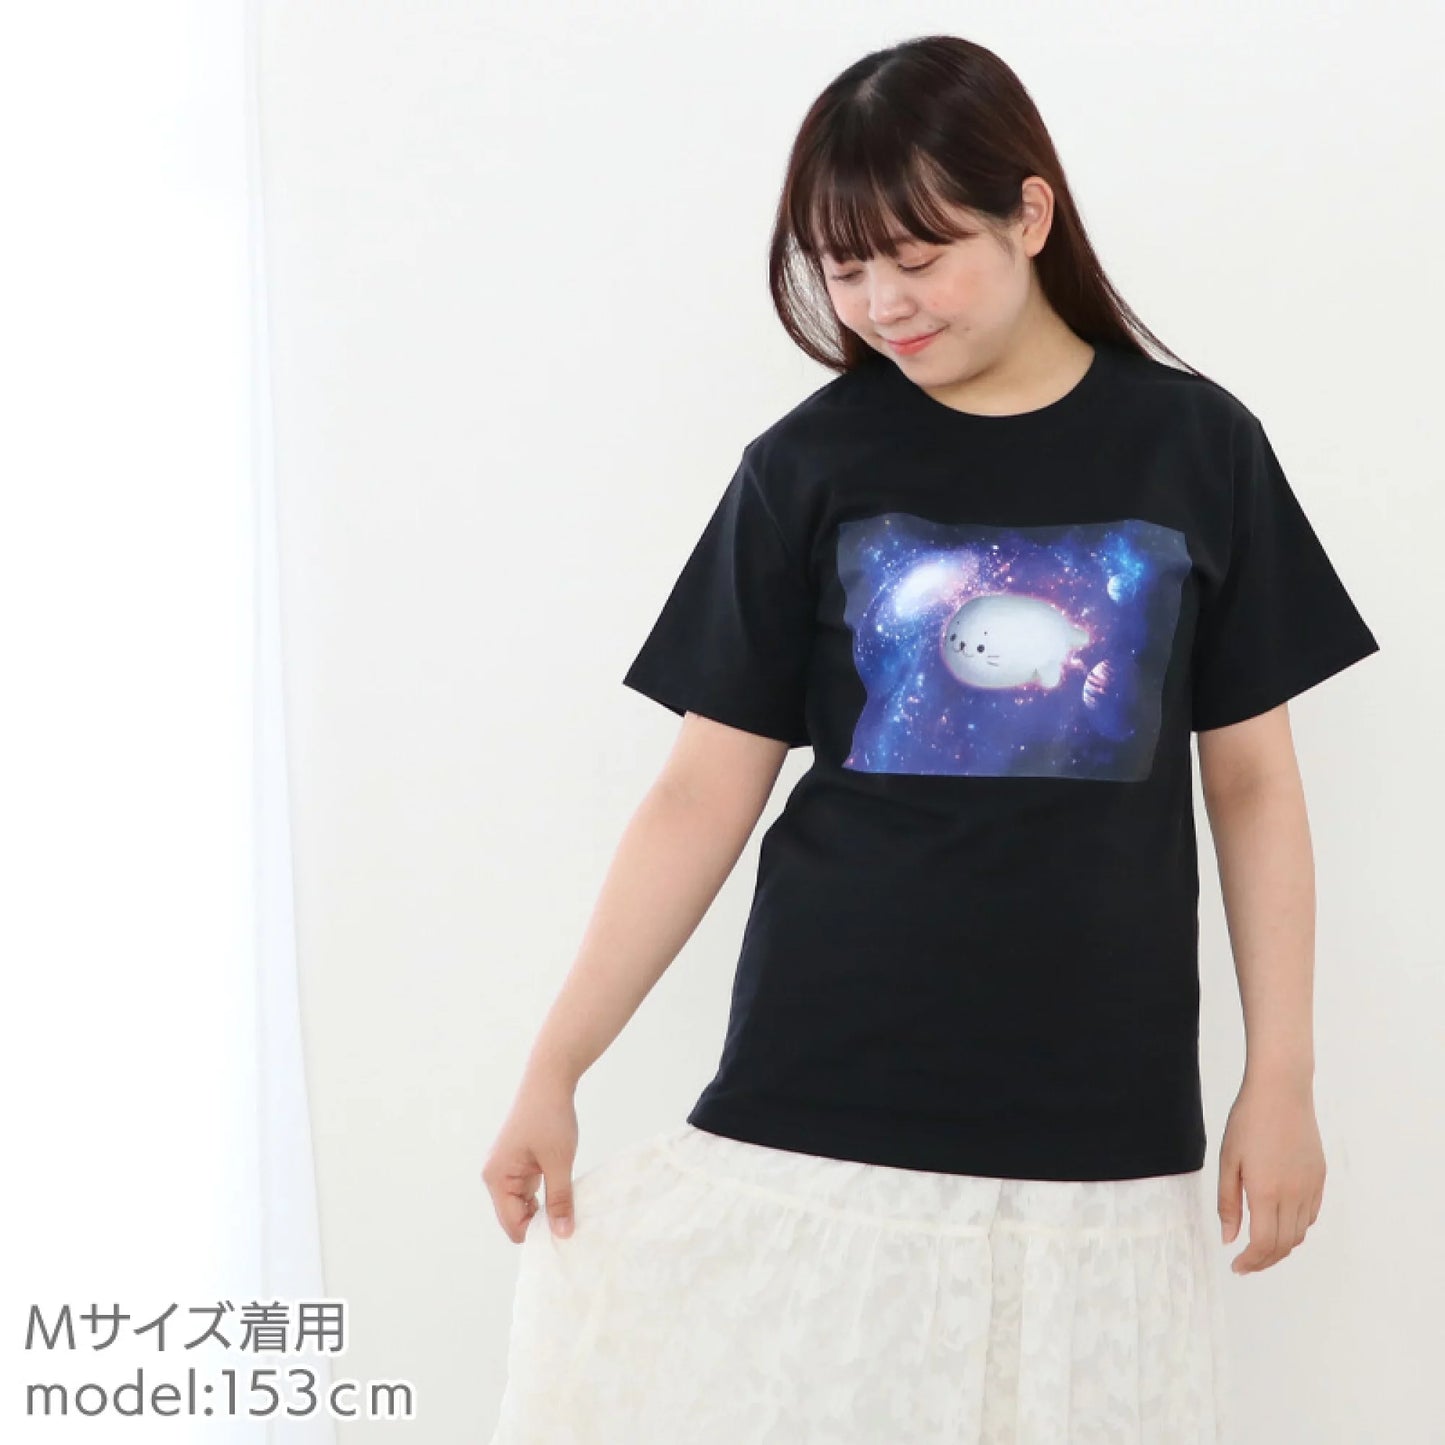 Sirotan T shirt【宇宙】